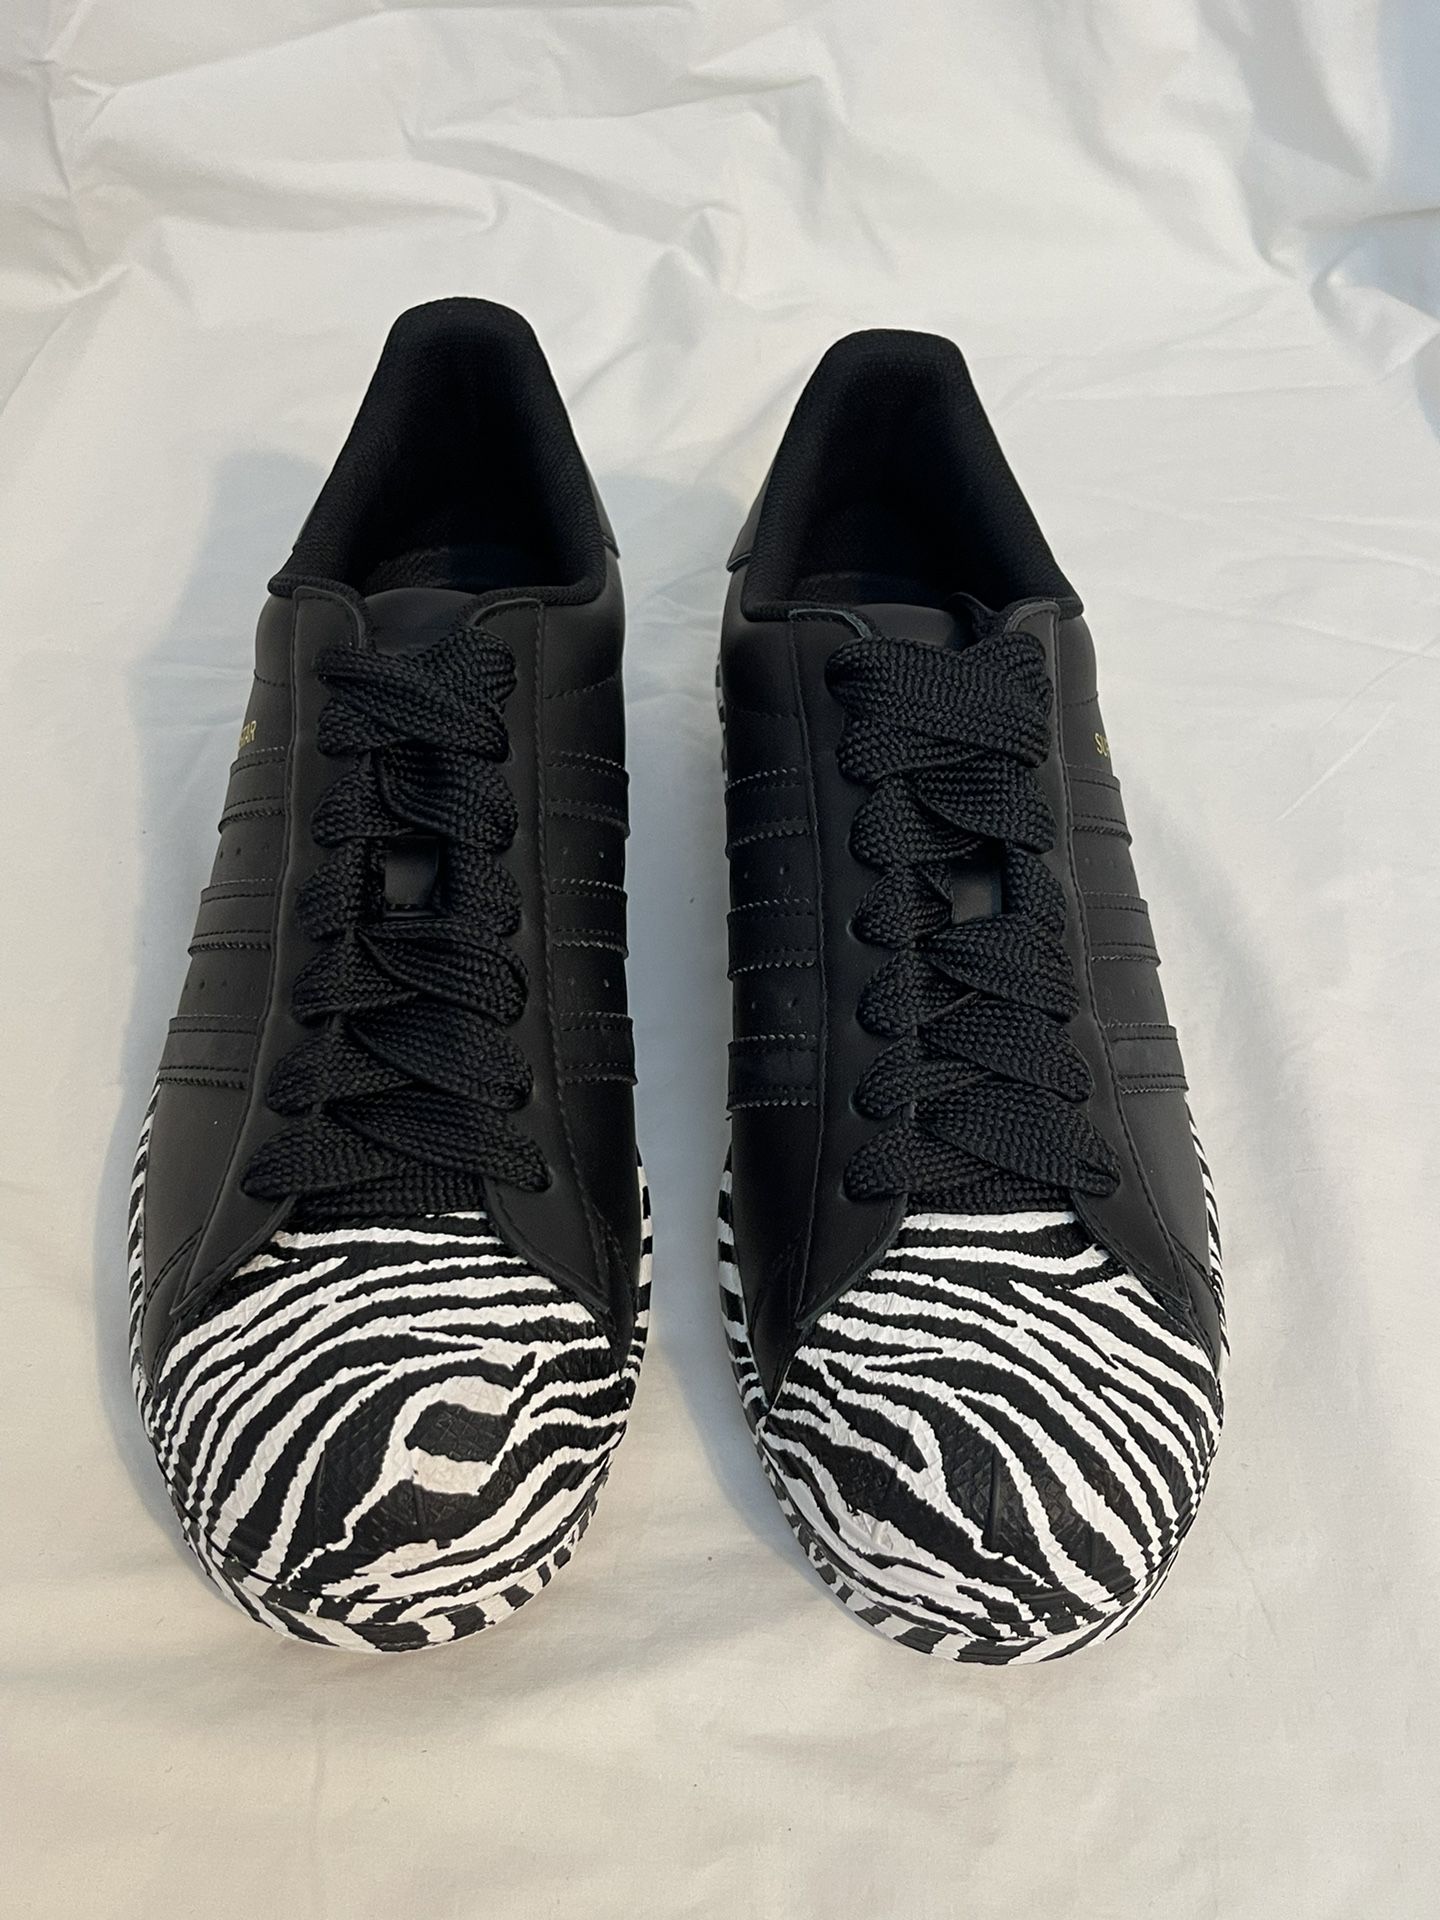 Adidas Superstar Zebra Print Fashion Sneakers